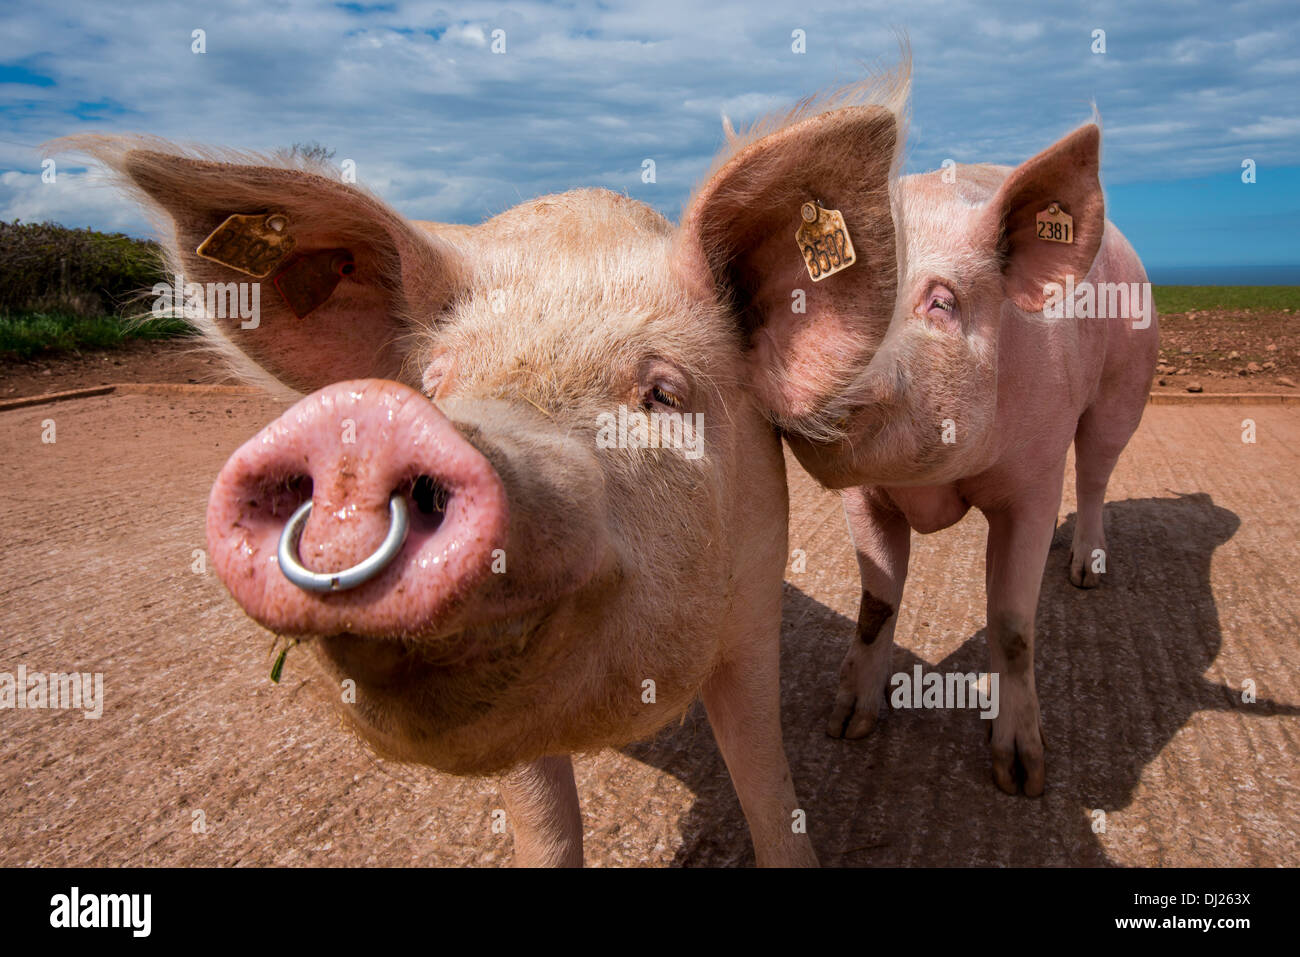 Schwein mit Nasenring Stockfotografie - Alamy